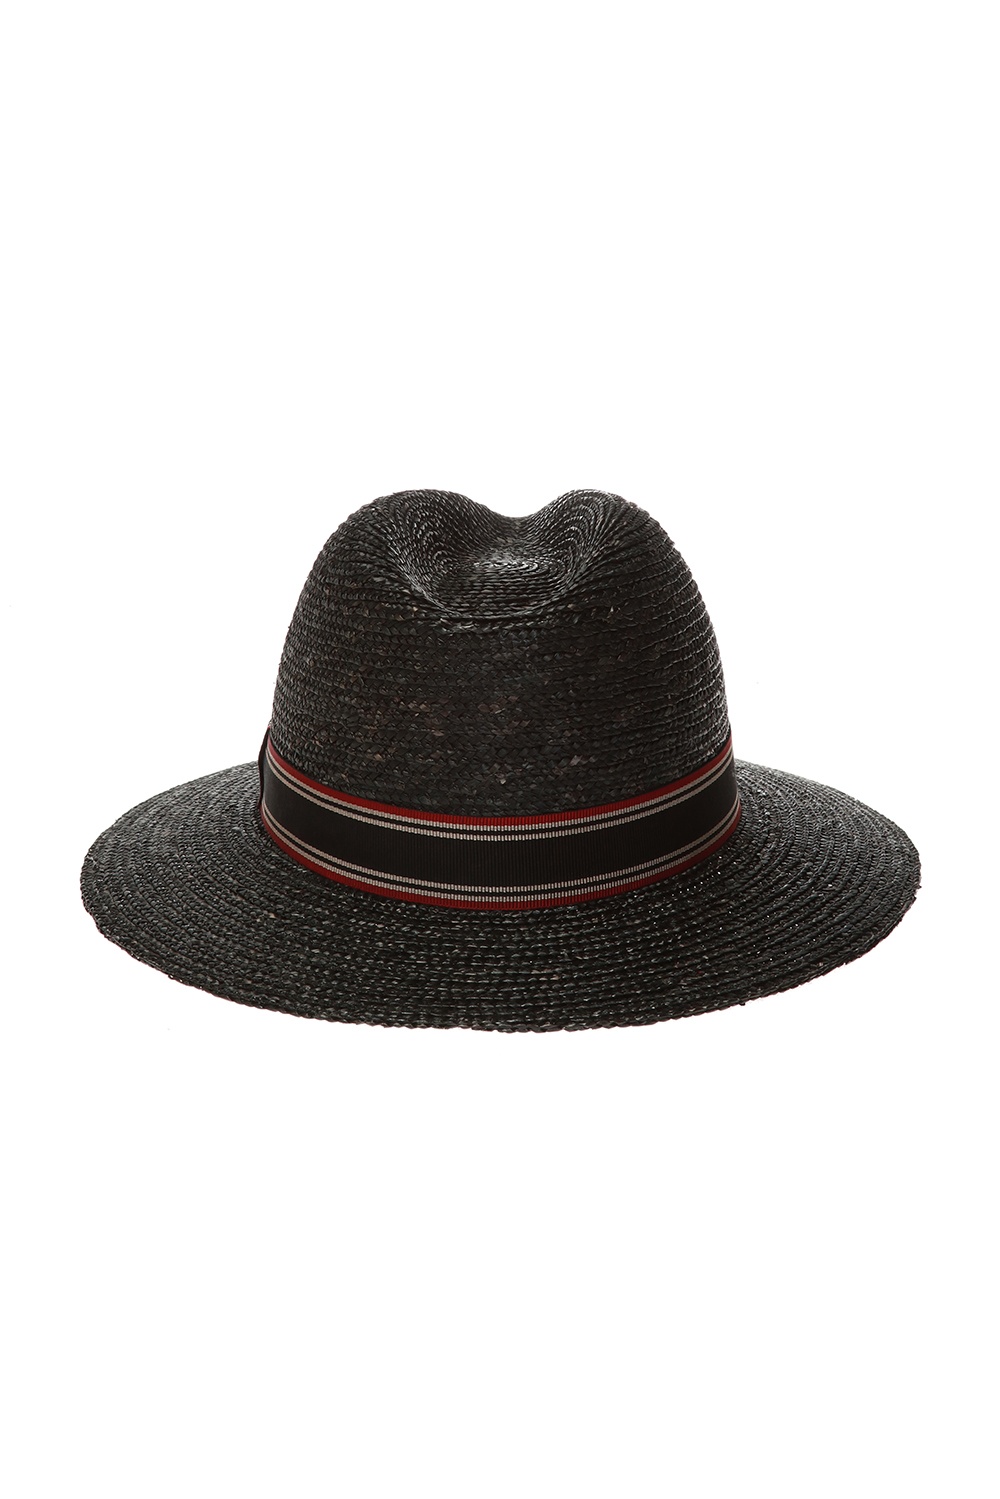 Black Straw hat with grosgrain band Saint Laurent - Vitkac TW